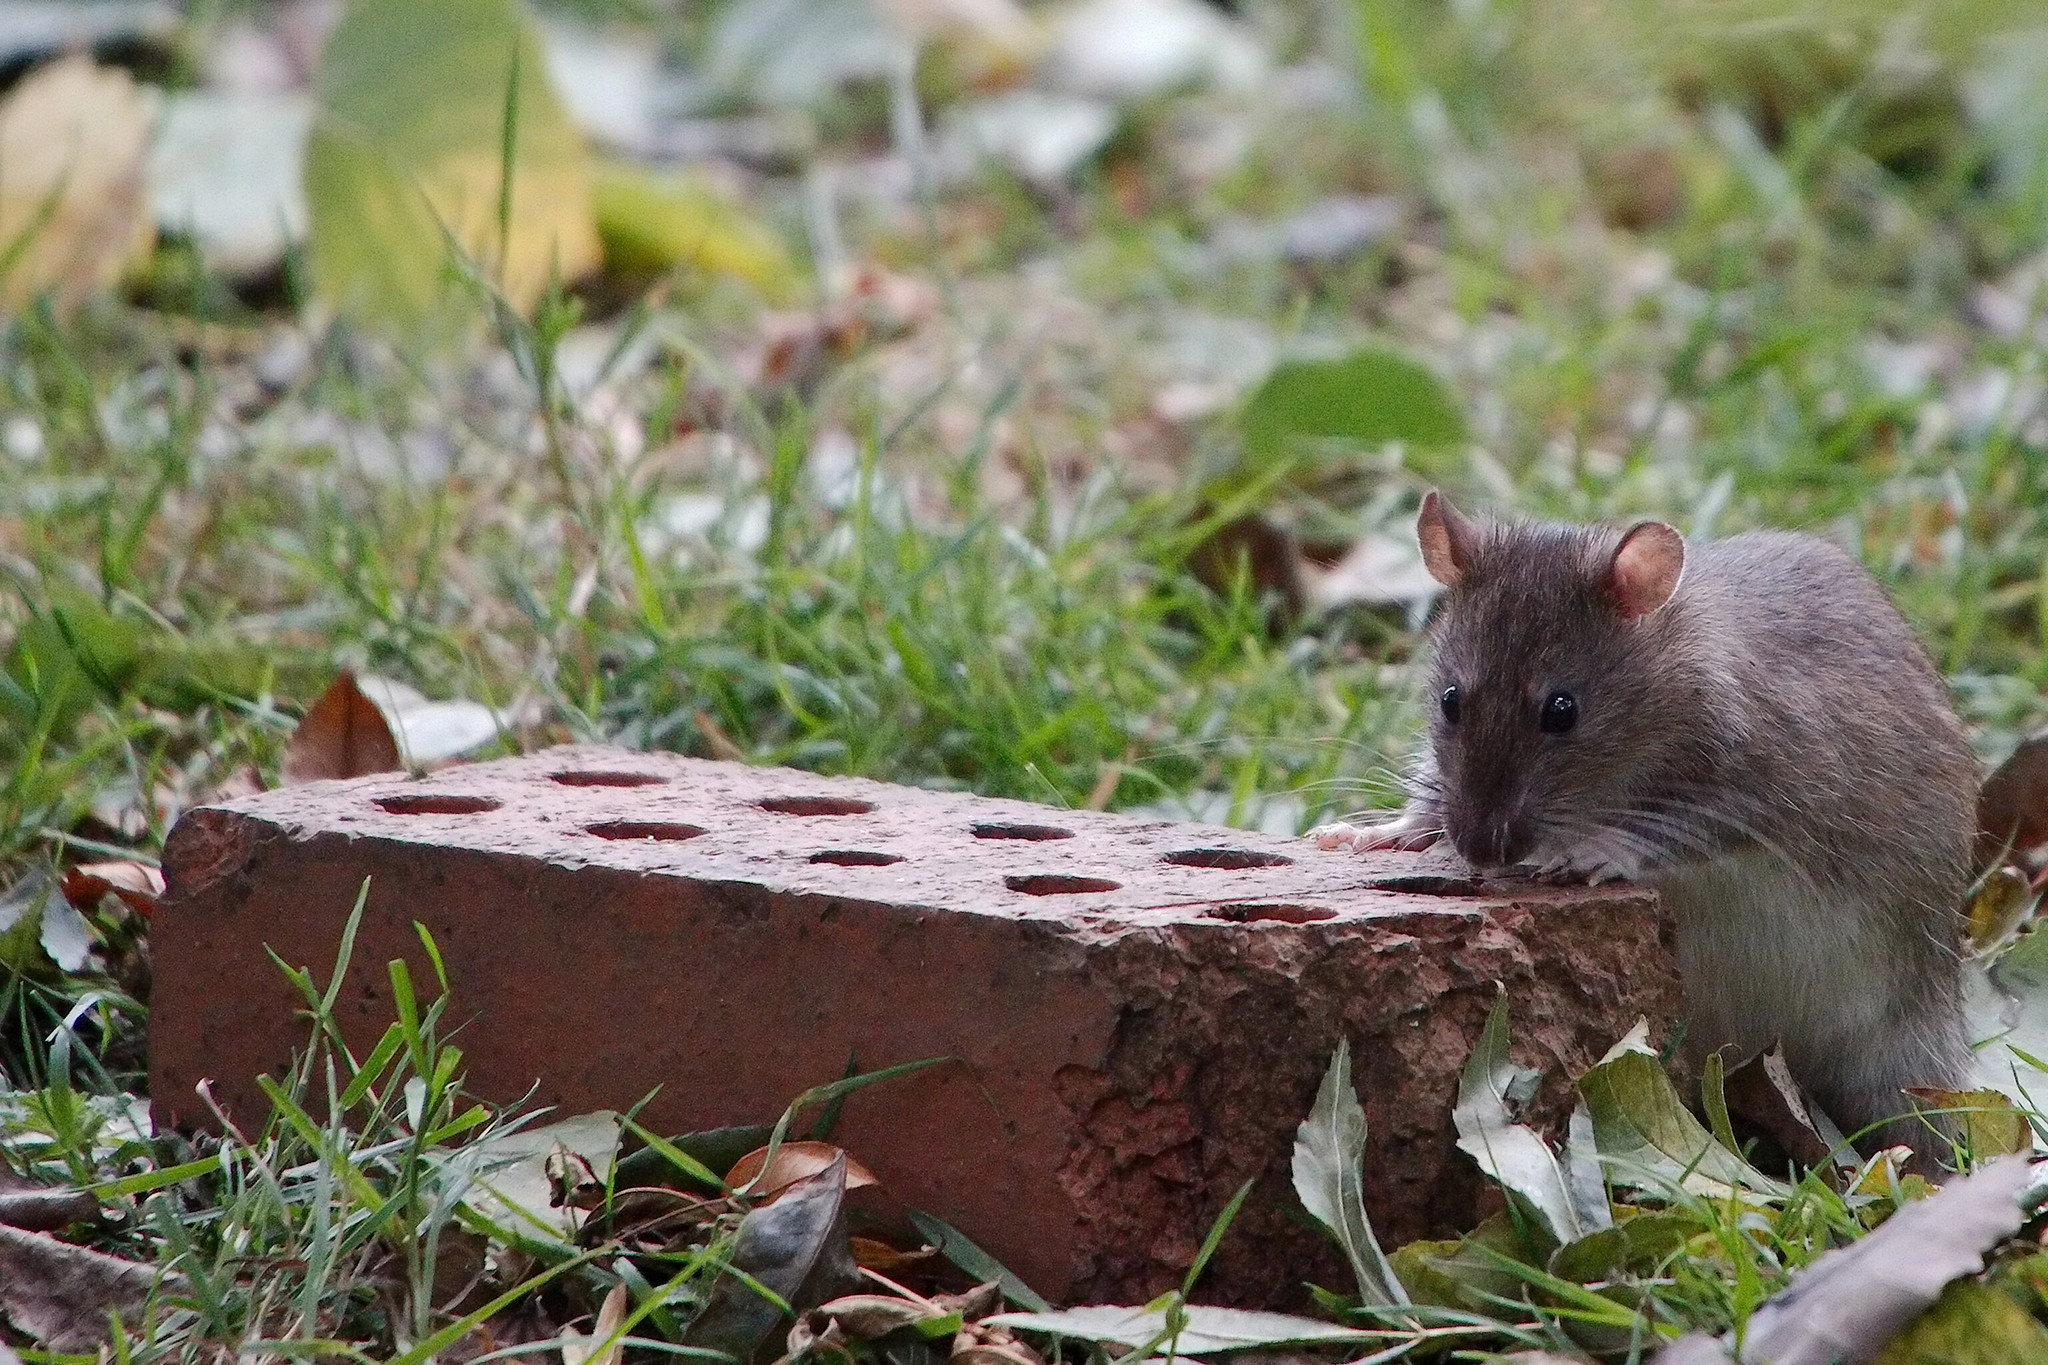 Wild Rat climbing up a breezeblock brick in a field.